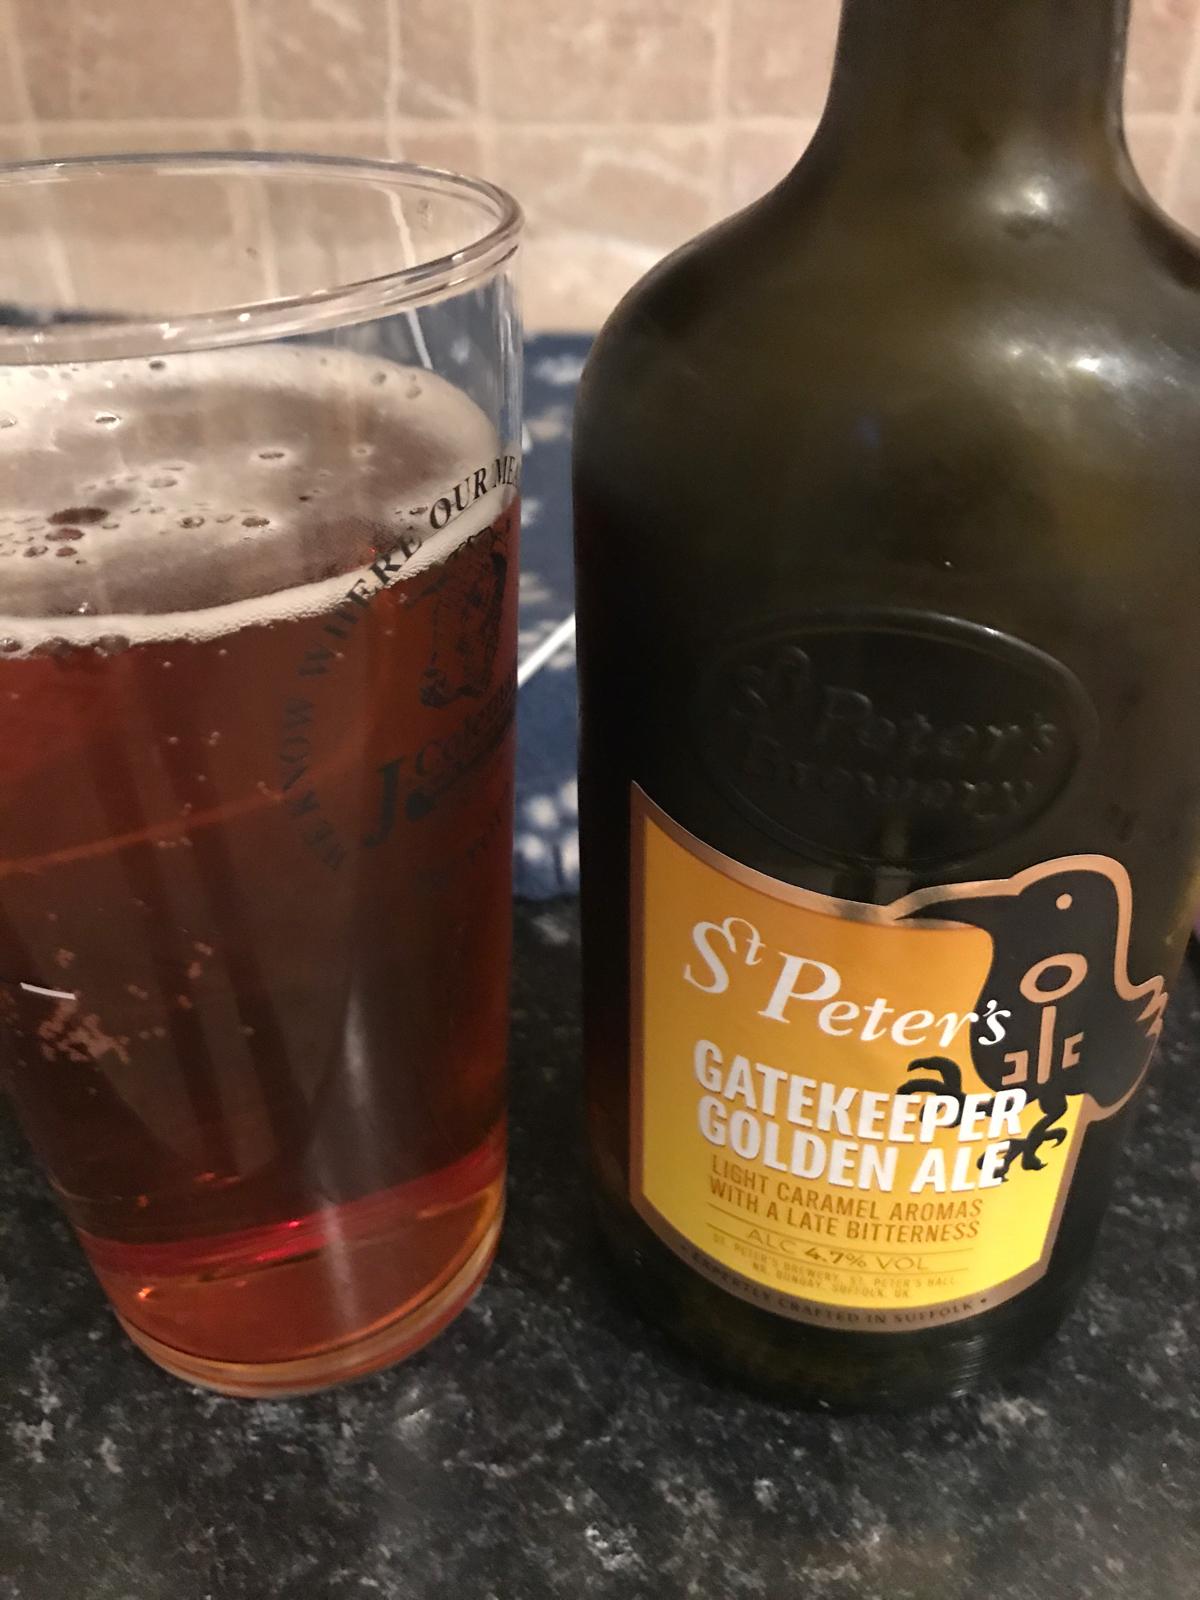 Gatekeeper Golden Ale